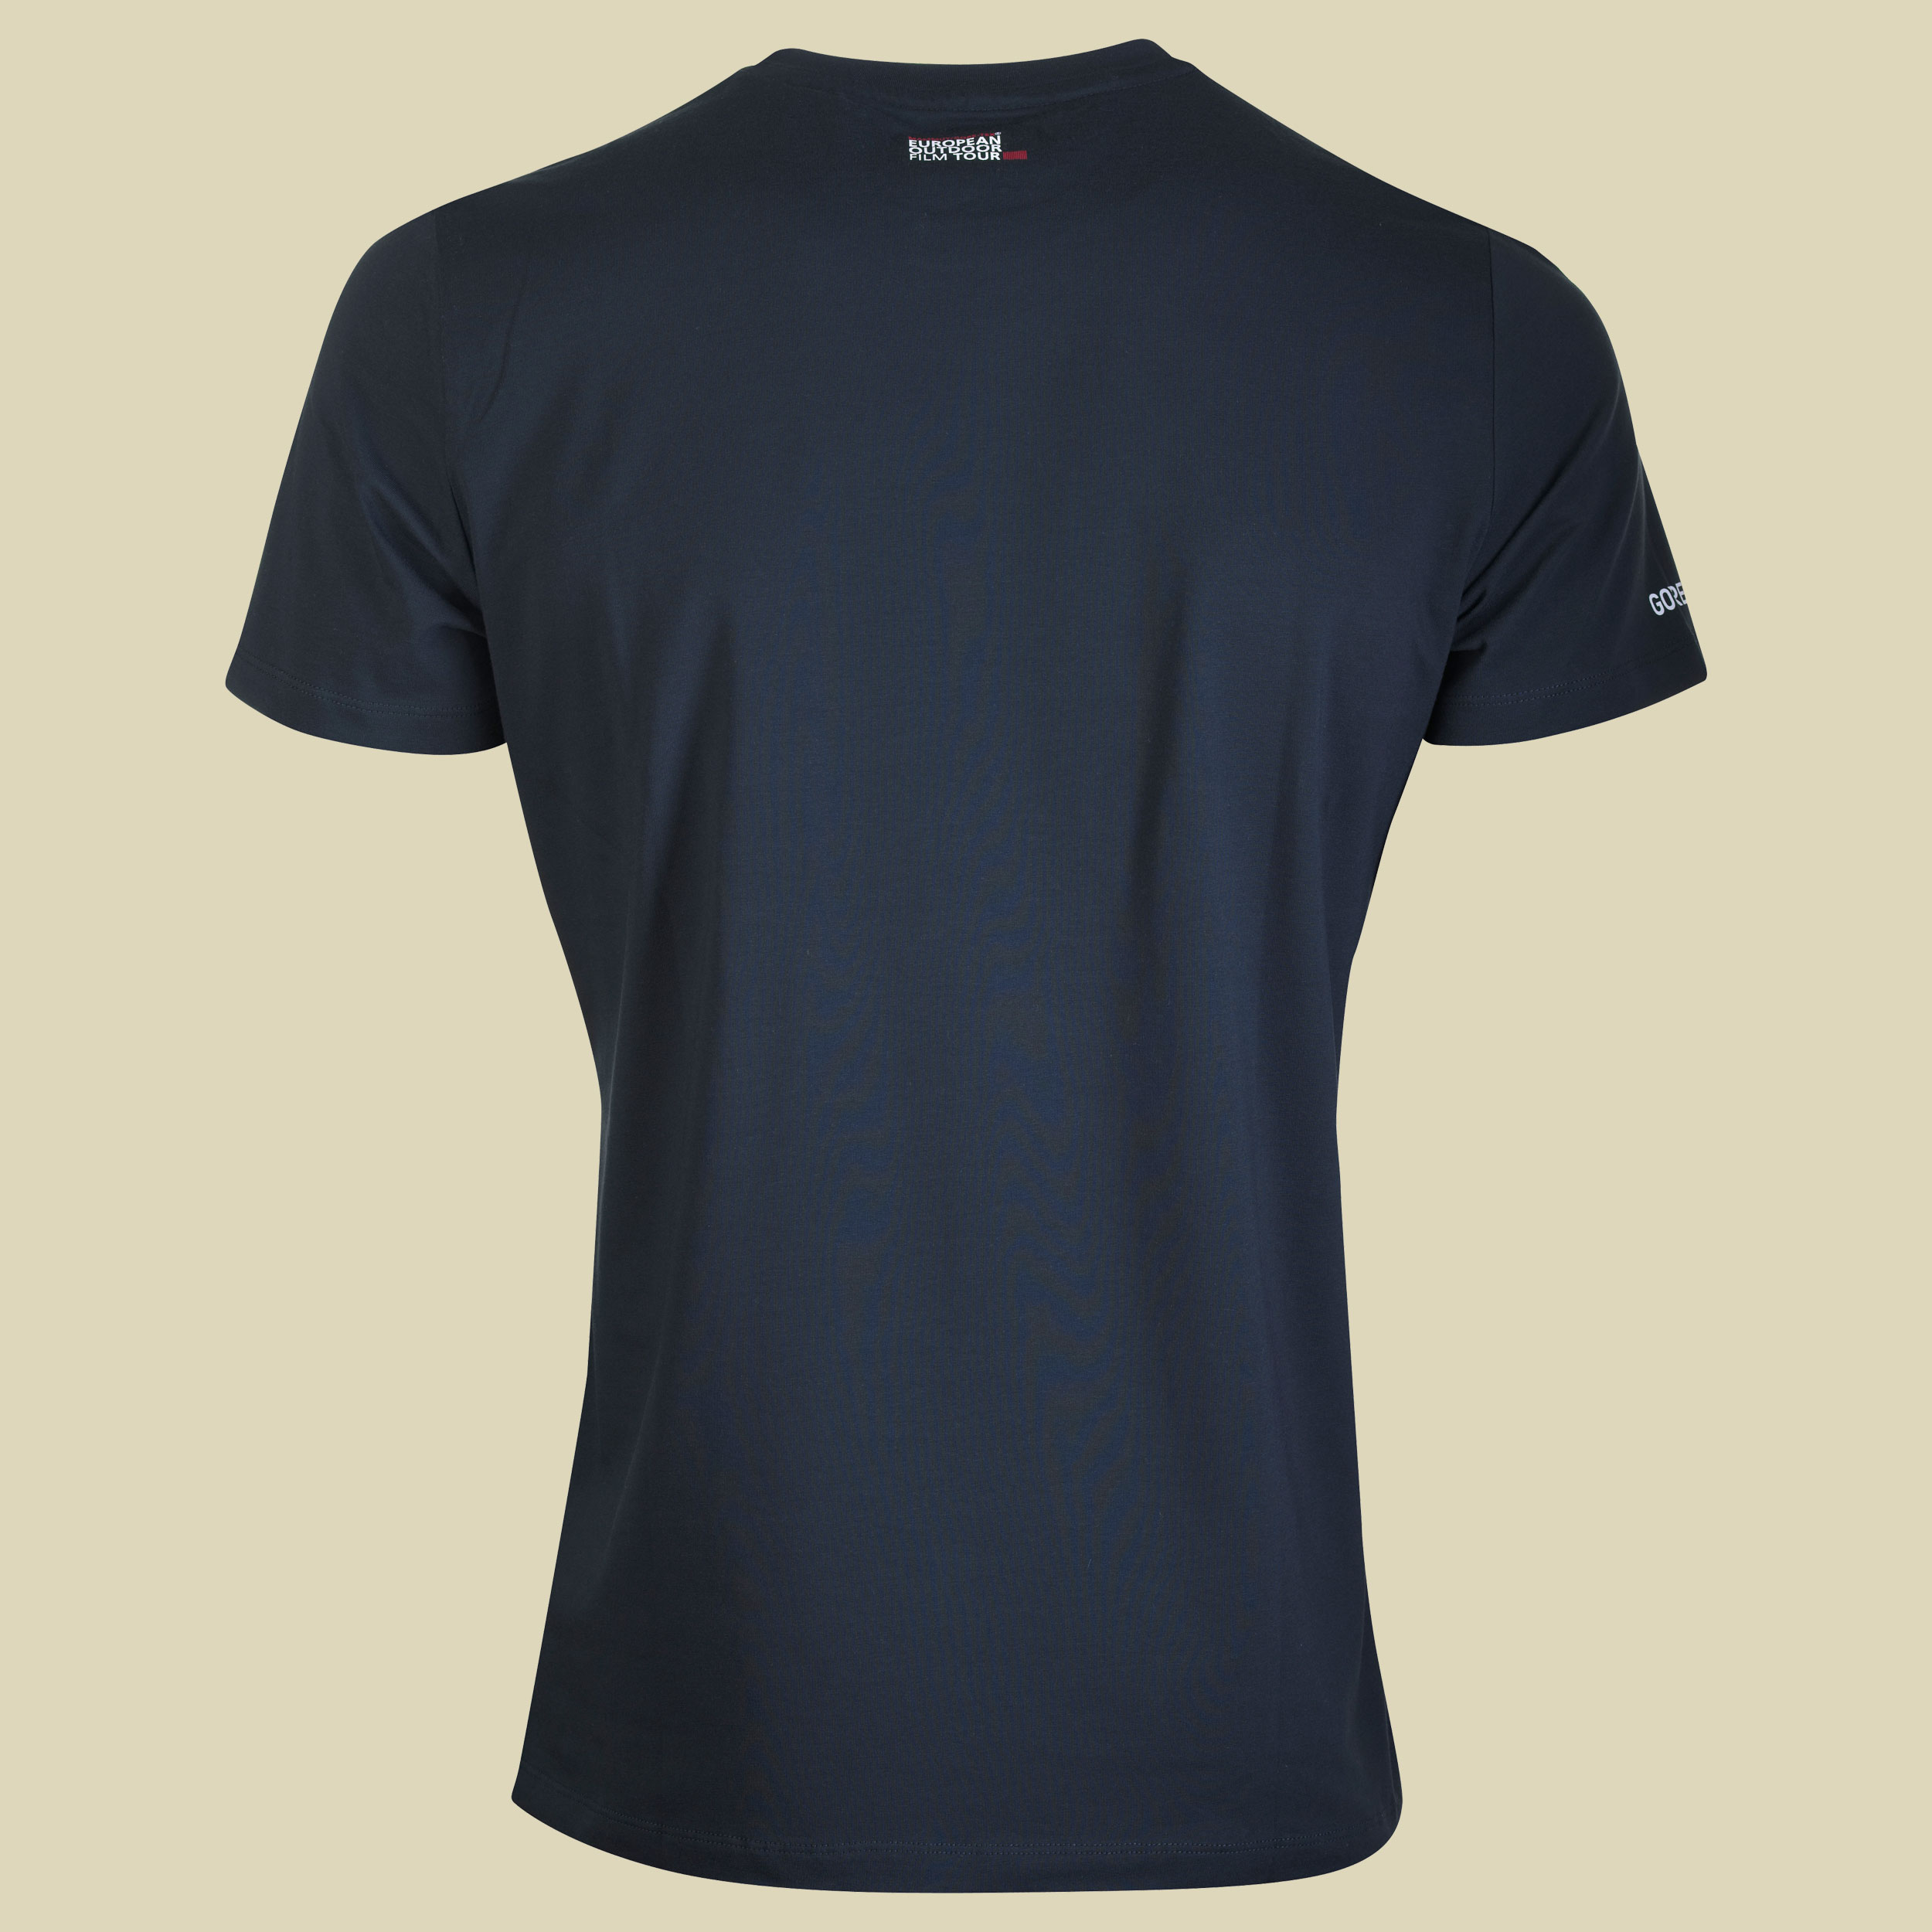 EOFT Logo T-Shirt Men 2021/22 Größe M  Farbe black